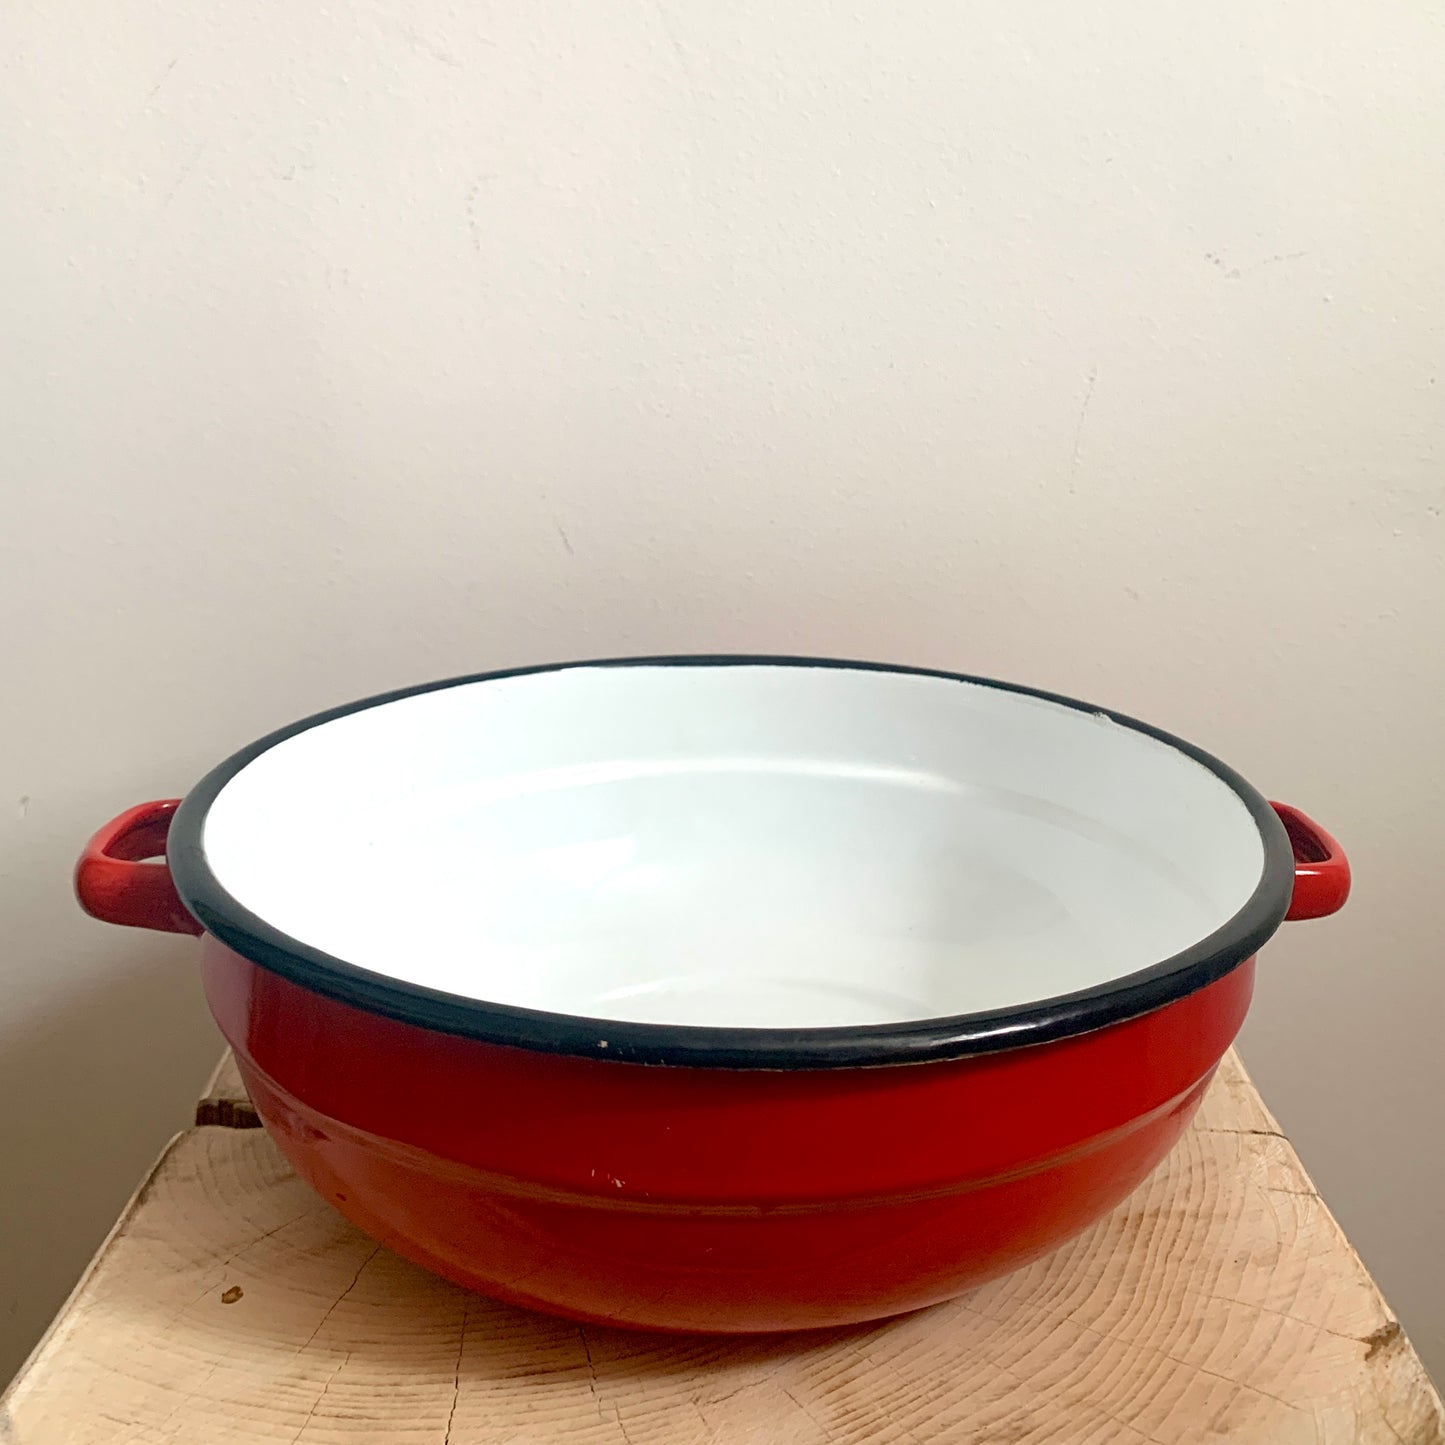 Vintage Enamel Serving Bowl with a Lid